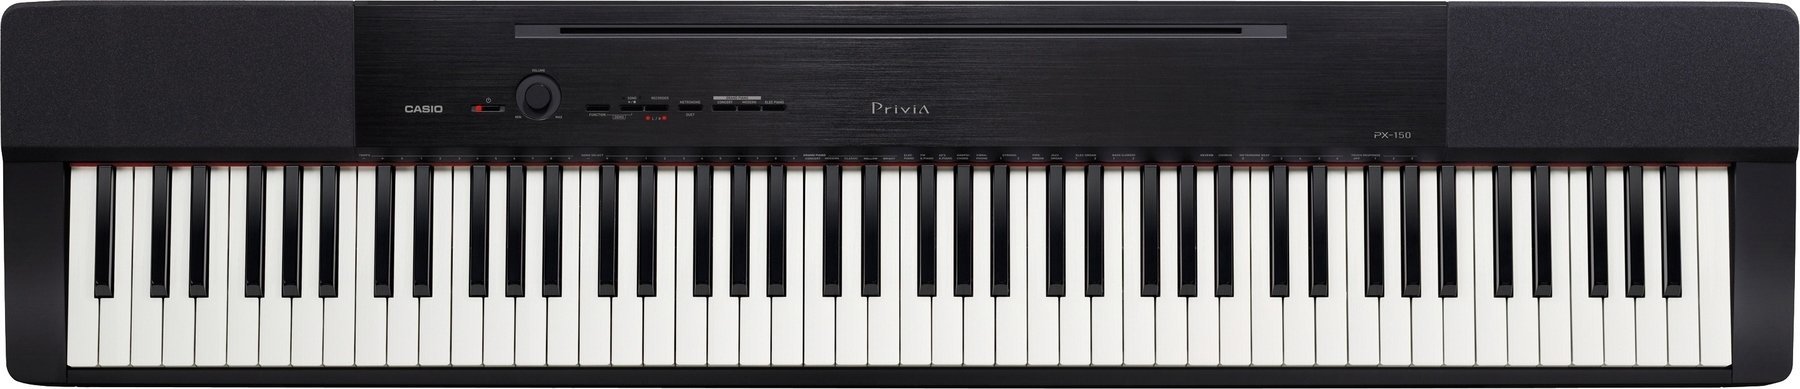 Cyfrowe stage pianino Casio PX150 BK Privia